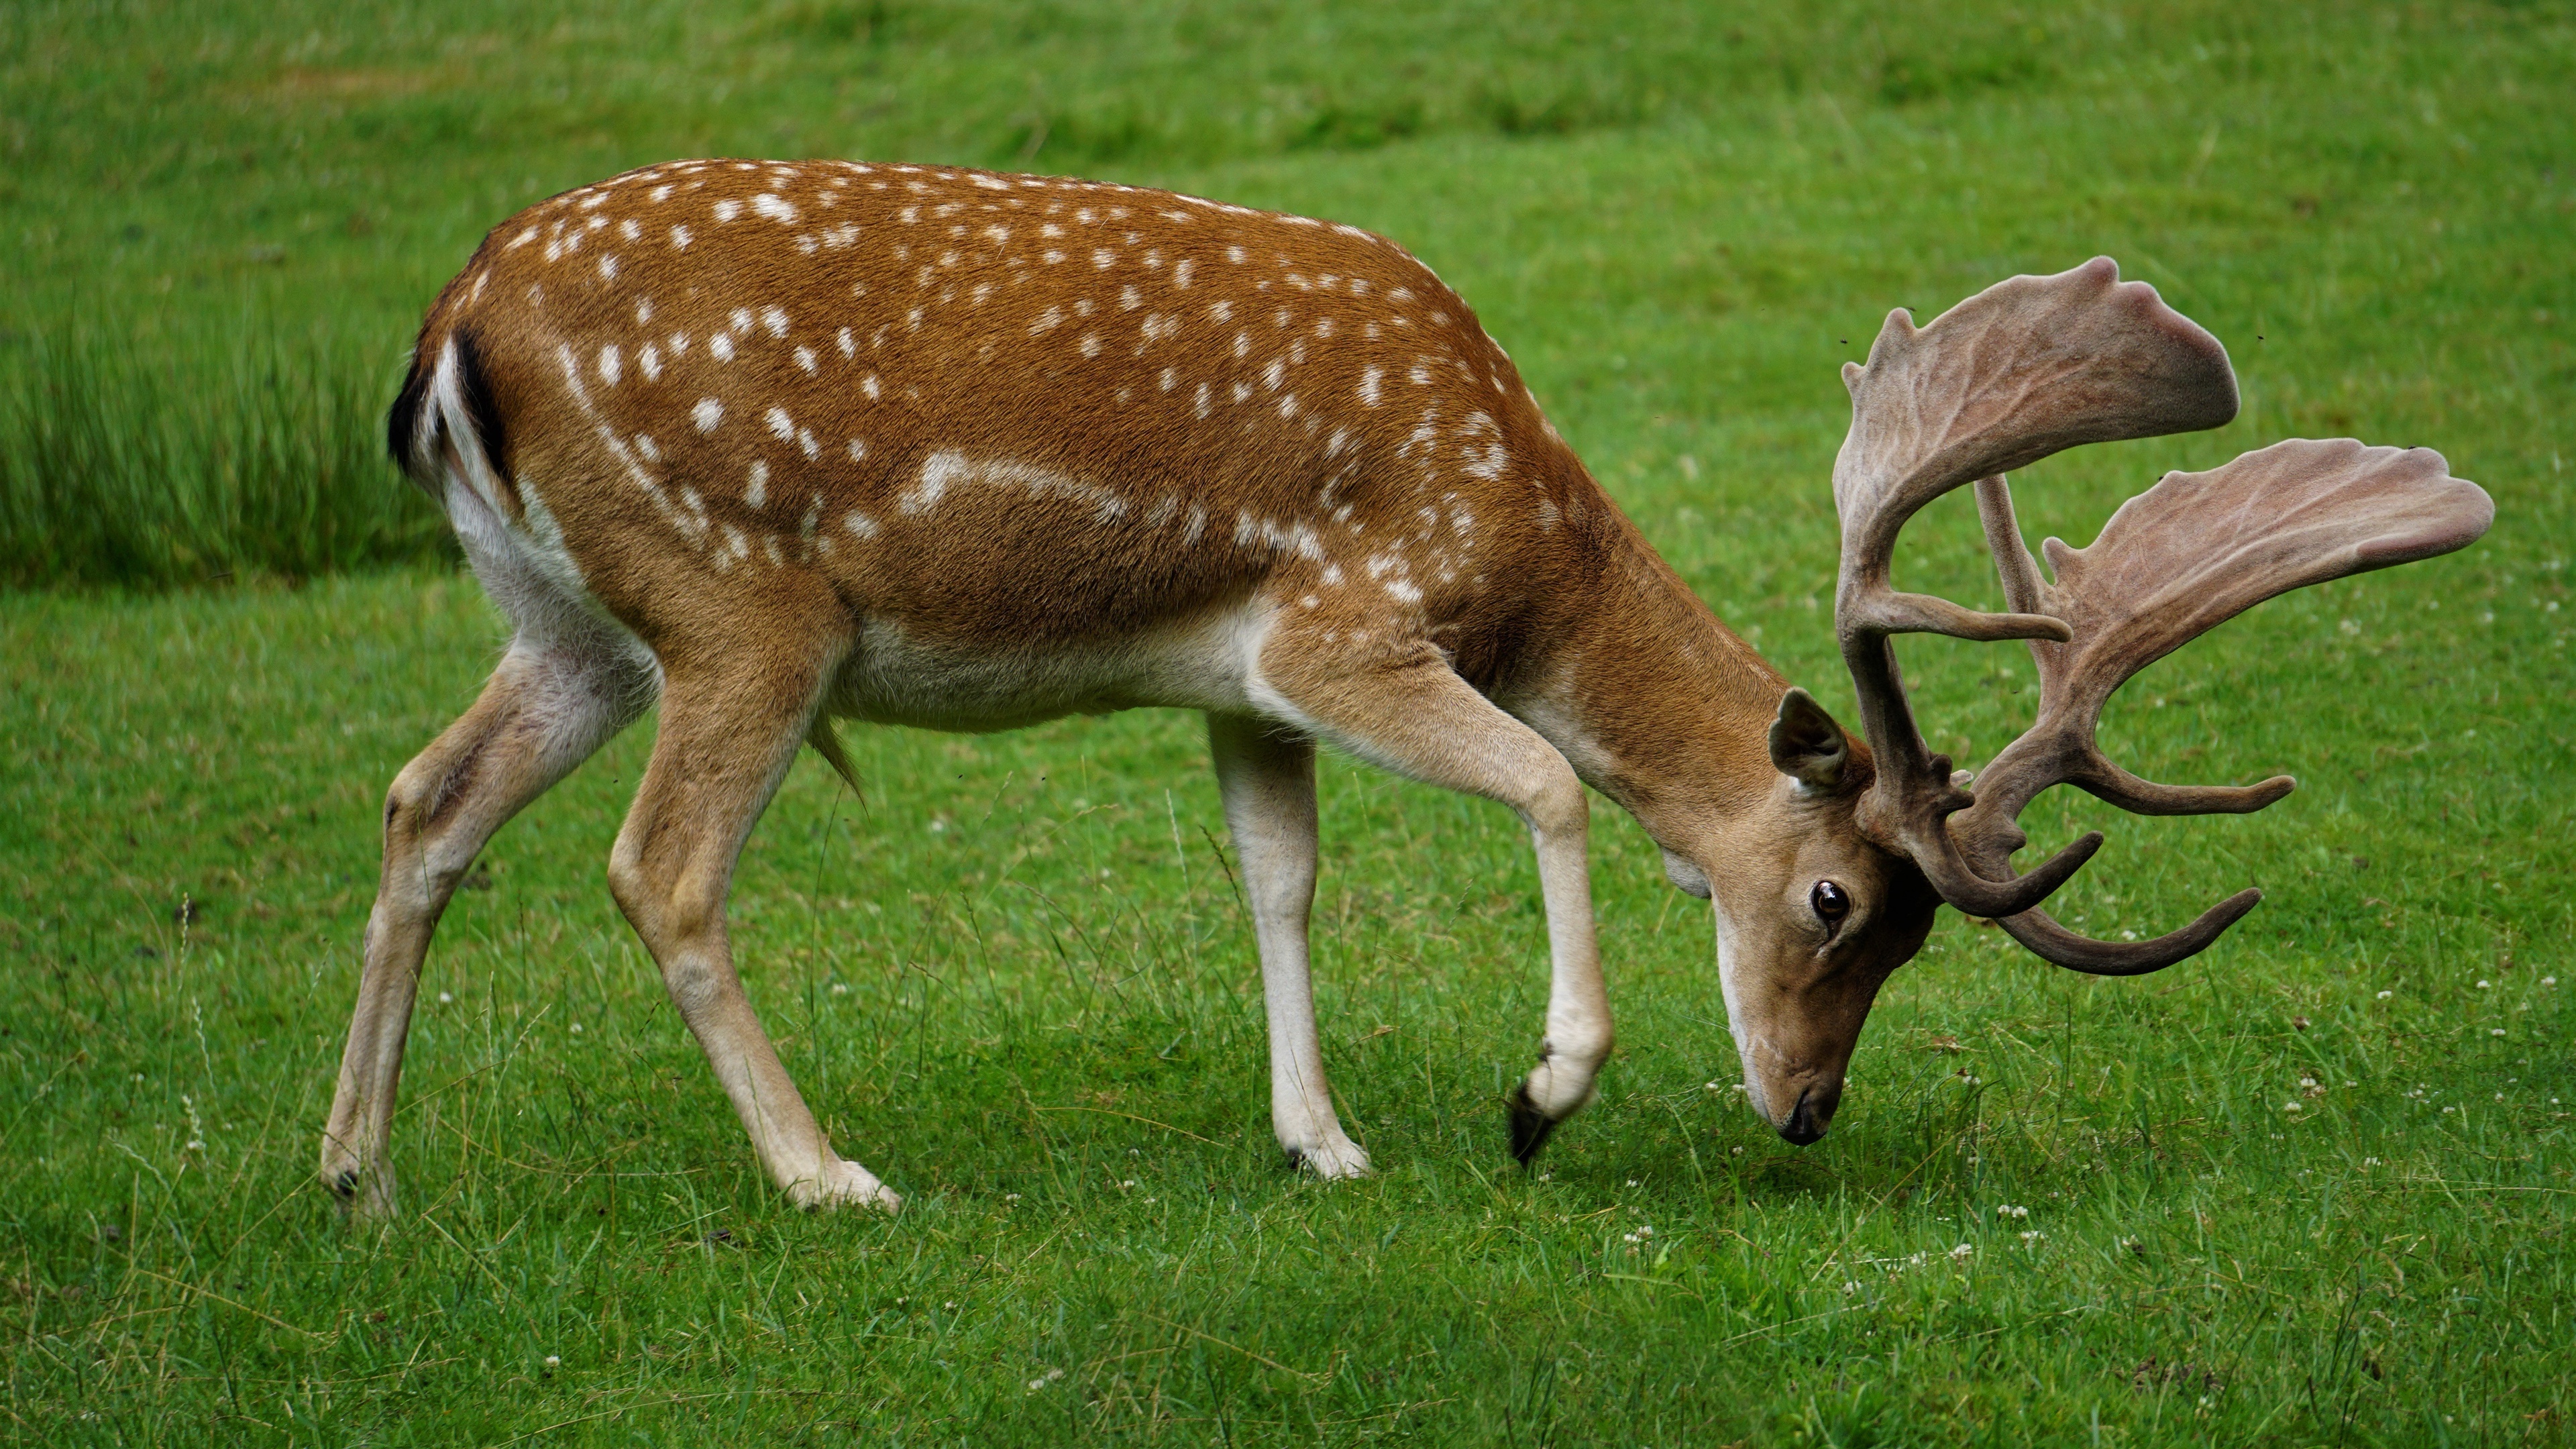 Deer in forest, HD wildlife, Nature's beauty, Breathtaking image, 3840x2160 4K Desktop